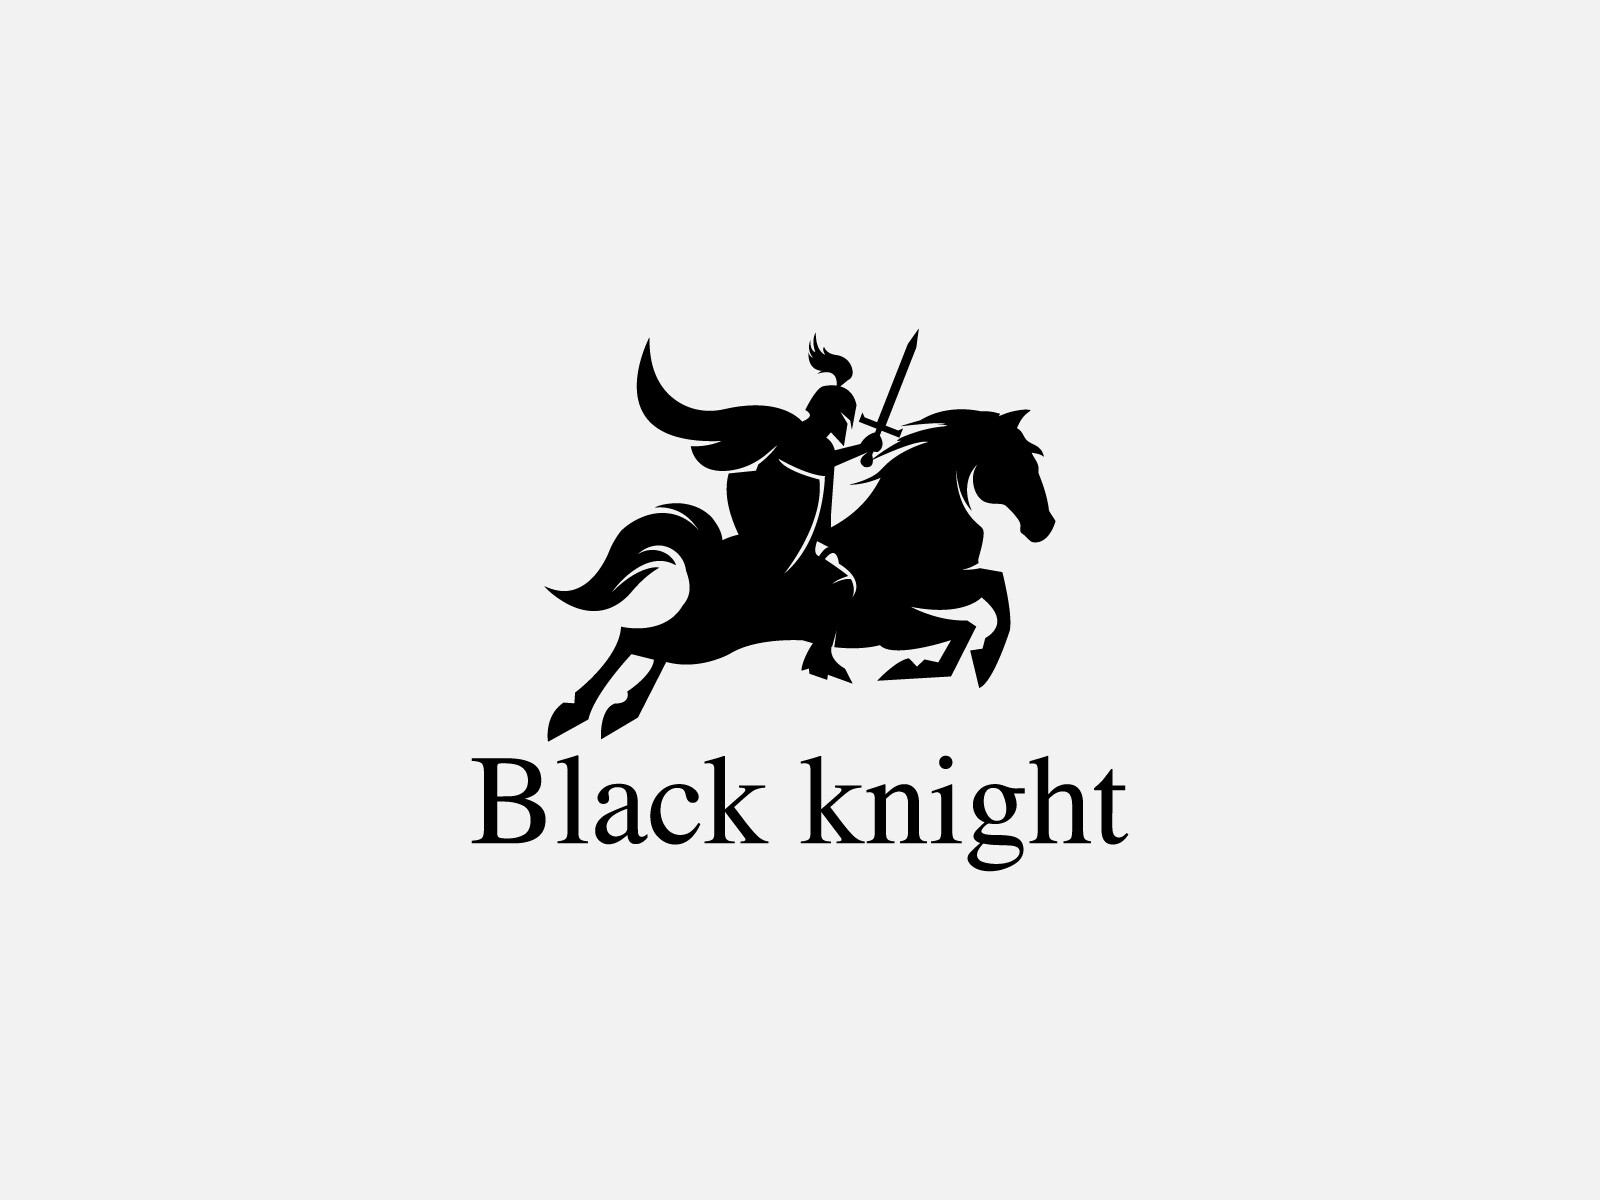 white knight logo